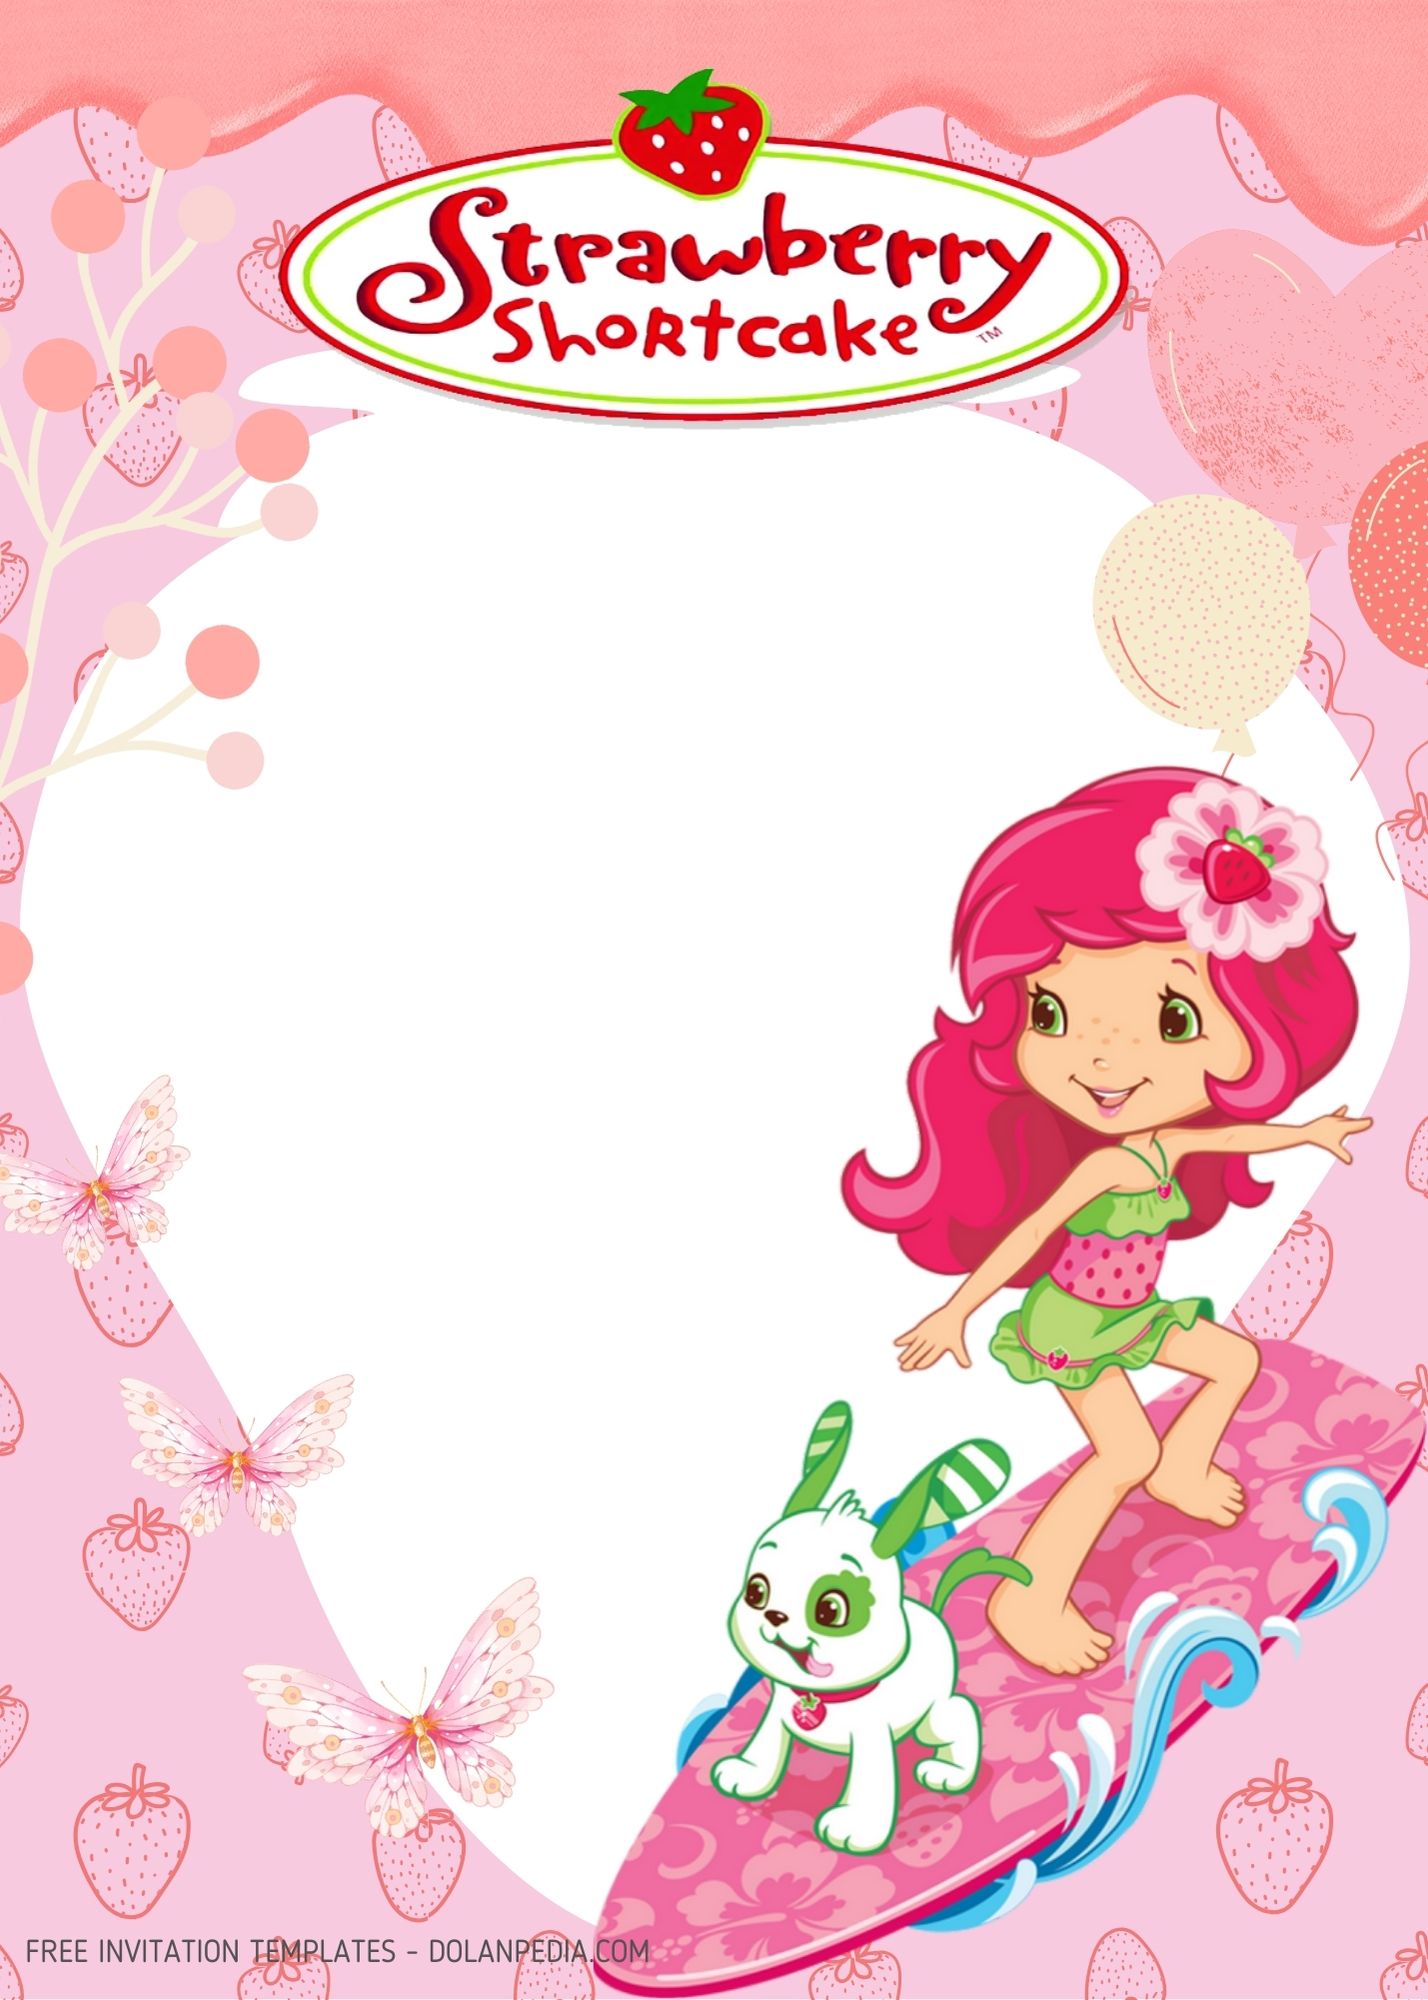 FREE Strawberry Shortcake Baking Party Invitation Templates